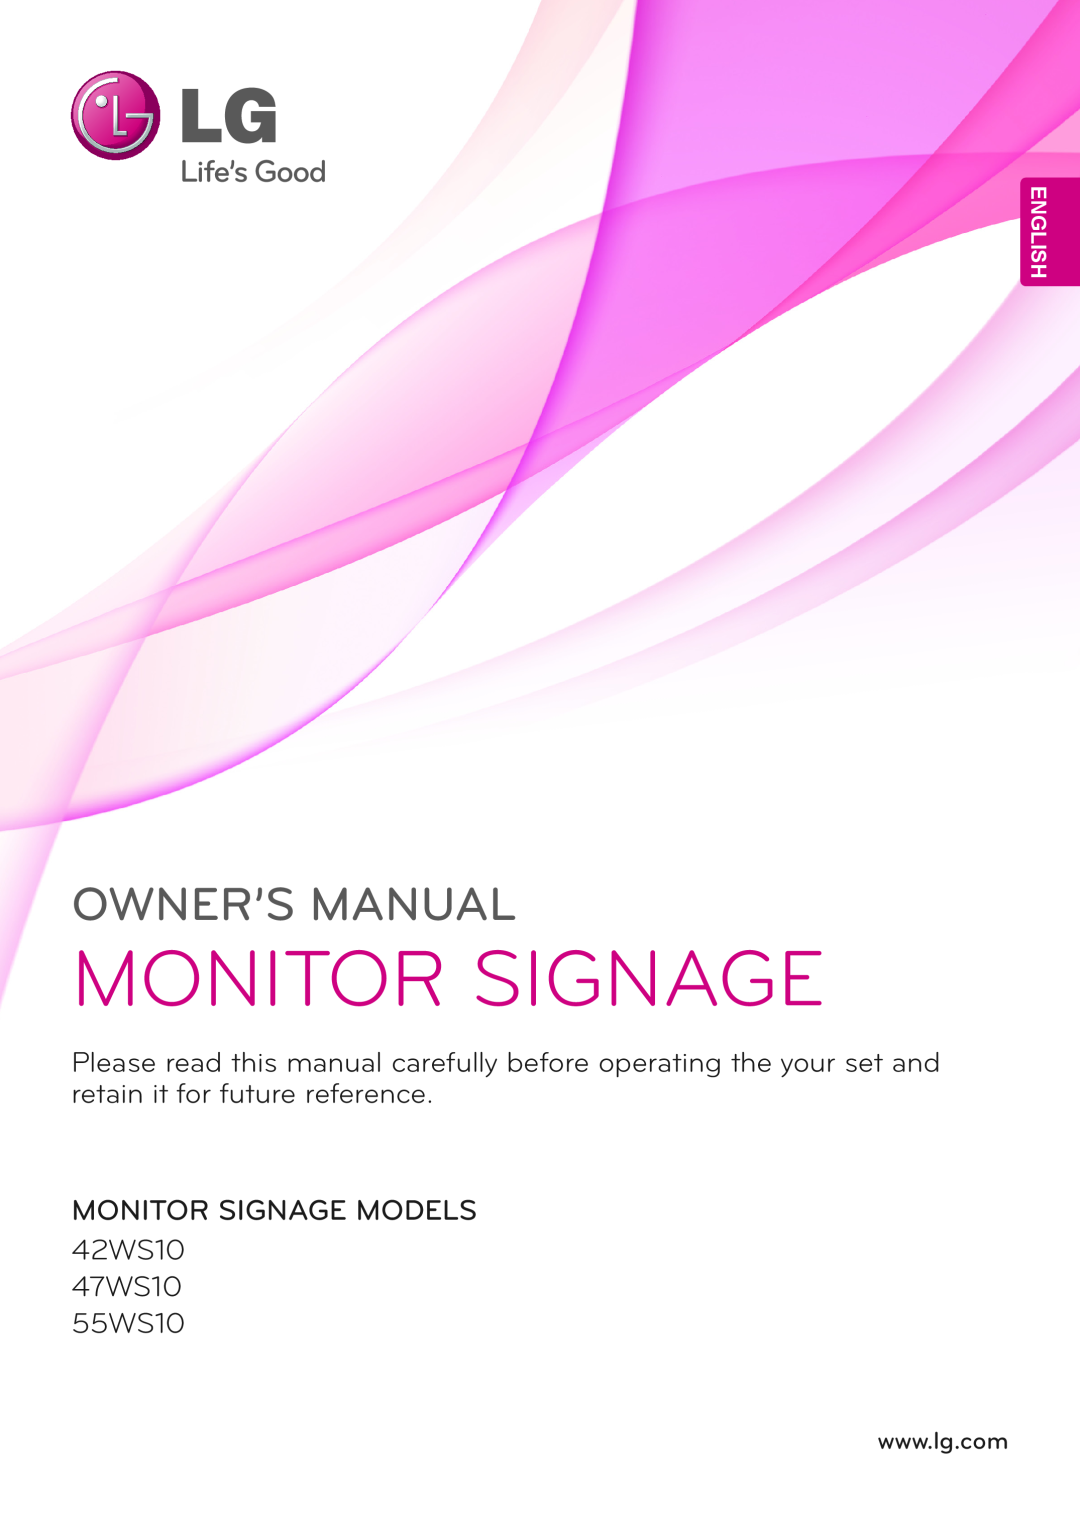 LG Electronics owner manual English, Monitor Signage, Owner’S Manual, MONITOR SIGNAGE MODELS 42WS10 47WS10 55WS10 